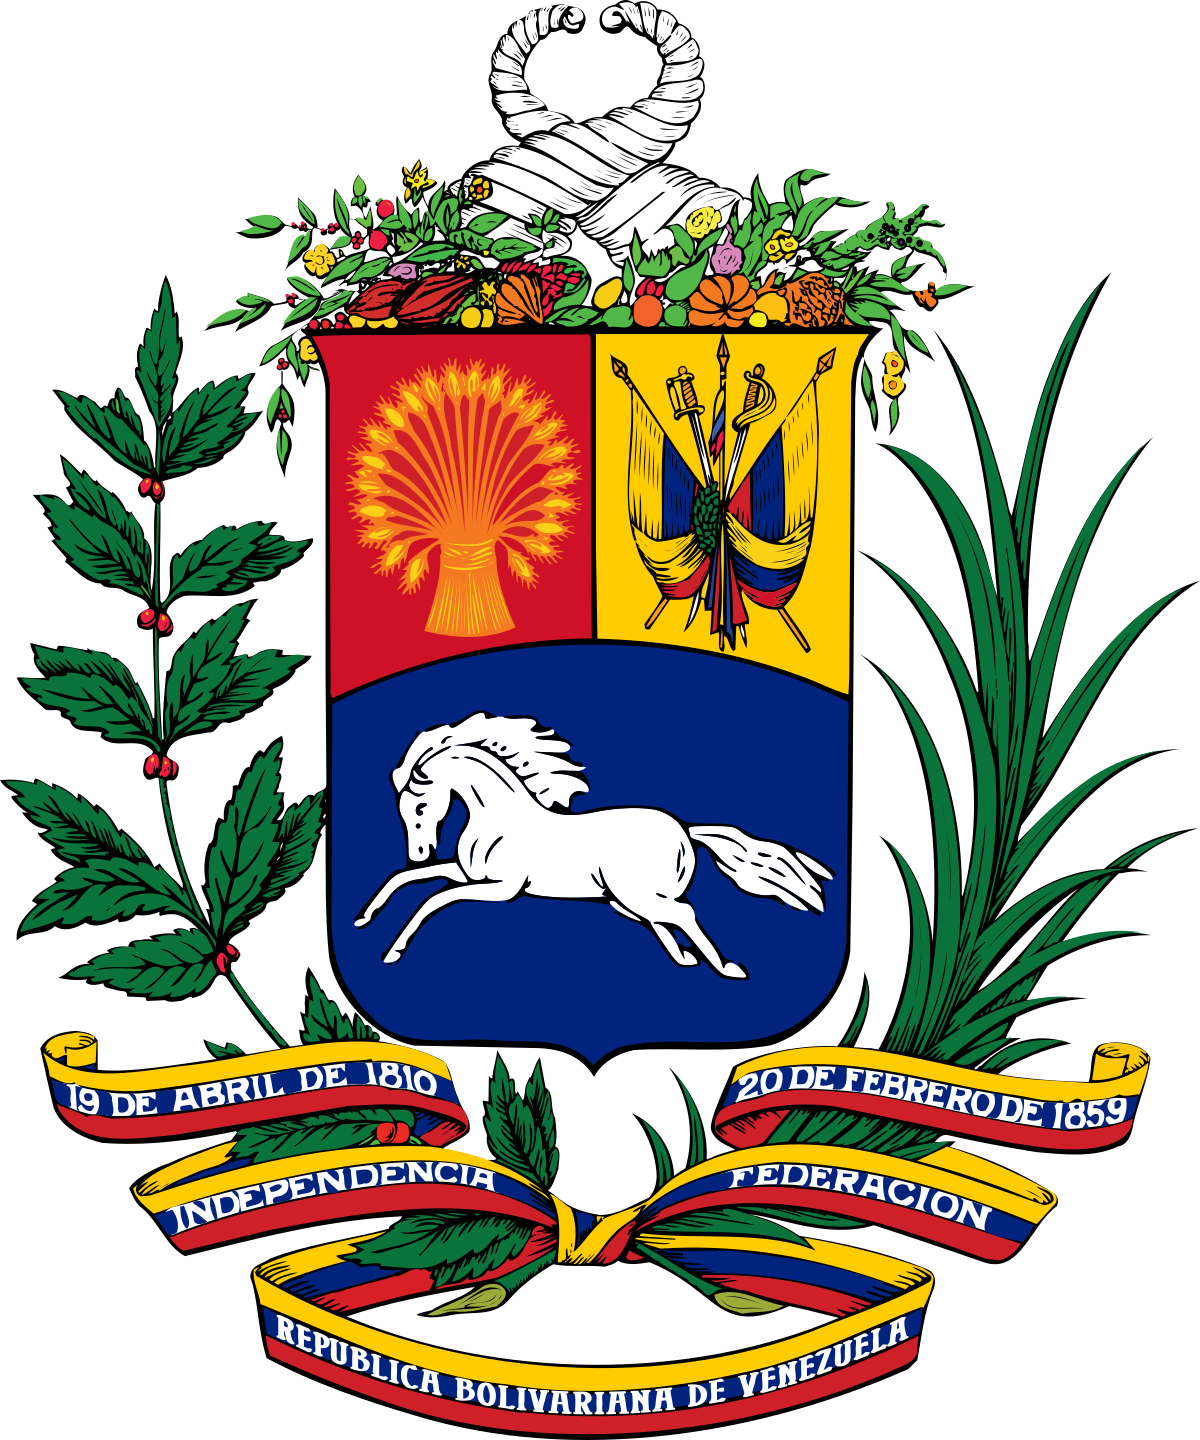 Constitution Of Venezuela - Venezuela Emblem (1200x1440)